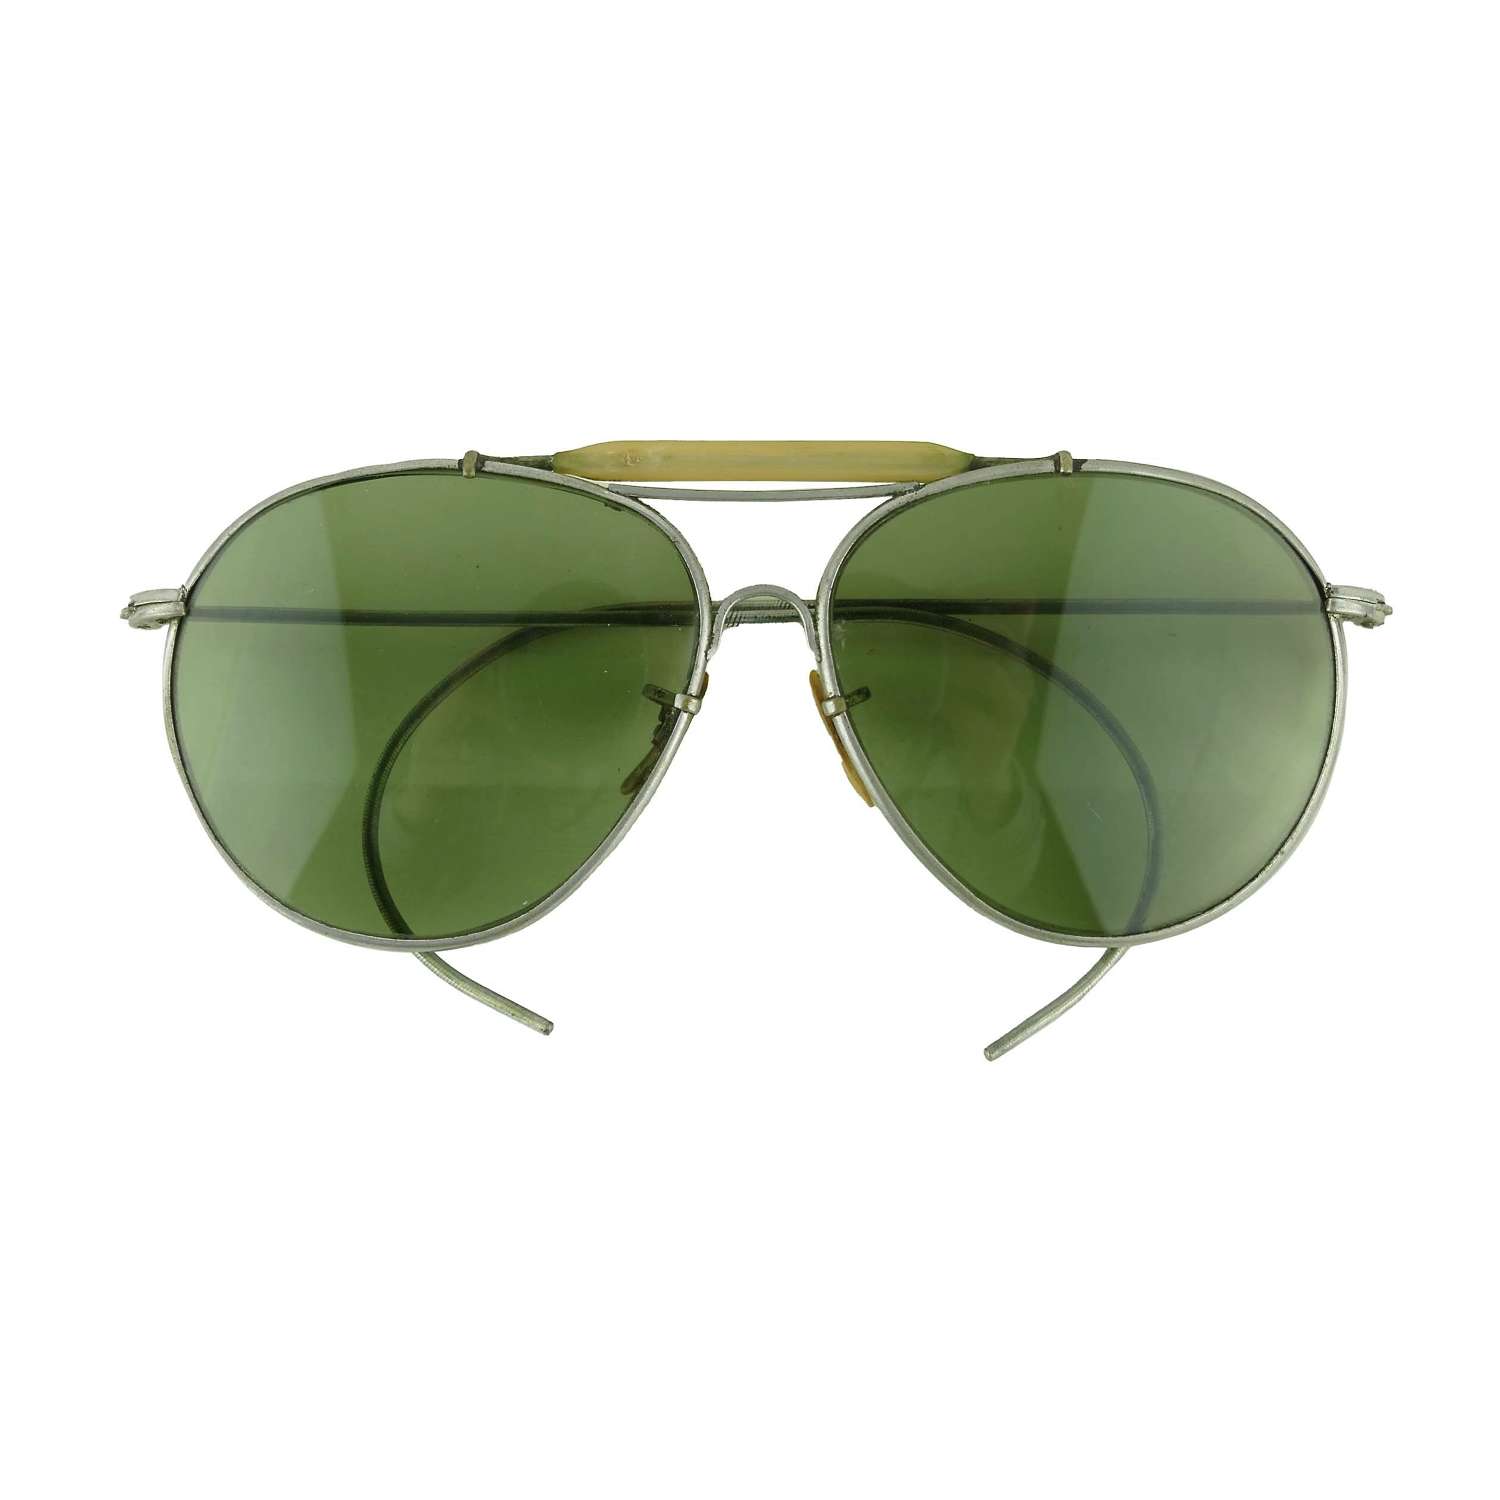 USAAF sunglasses, type AN6531